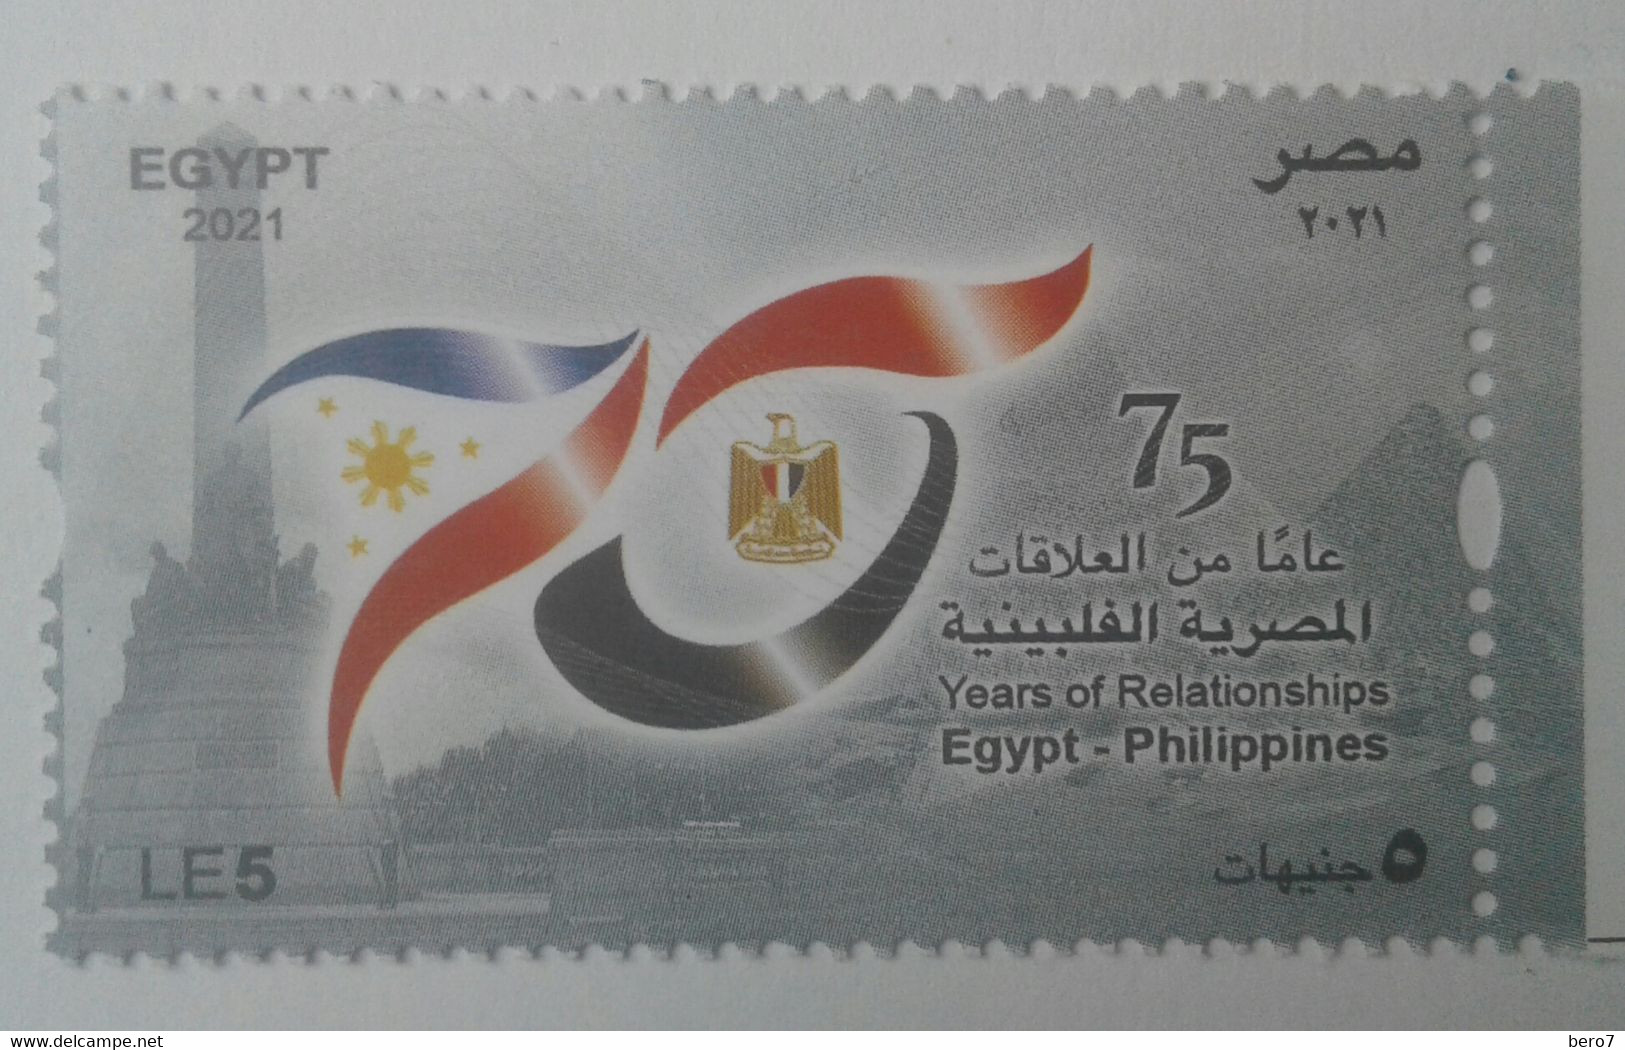 Egypt-Diplomatic Relations With The Philippines, 75th Anniversary- (Unused) (MNH) - [2021] (Egypte) (Egitto) (Ägypten) - Ongebruikt